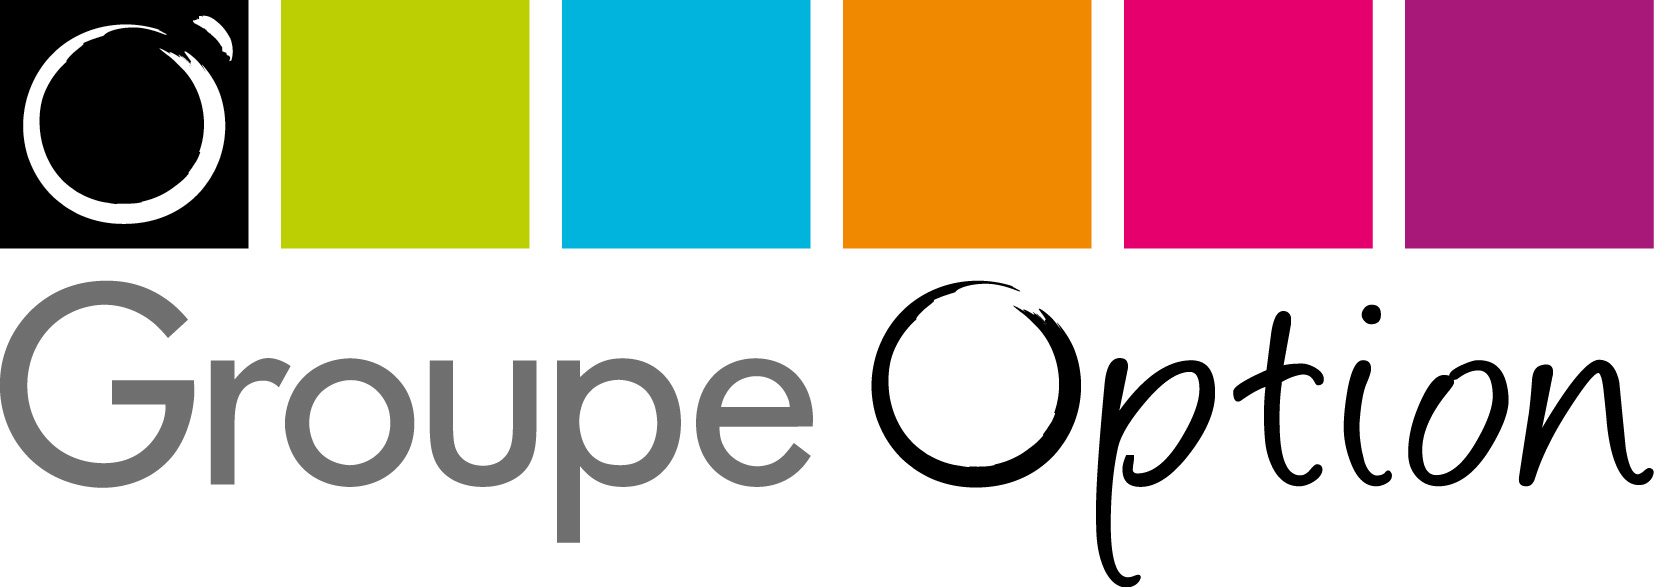 Option-groupe-interim-logo-2017